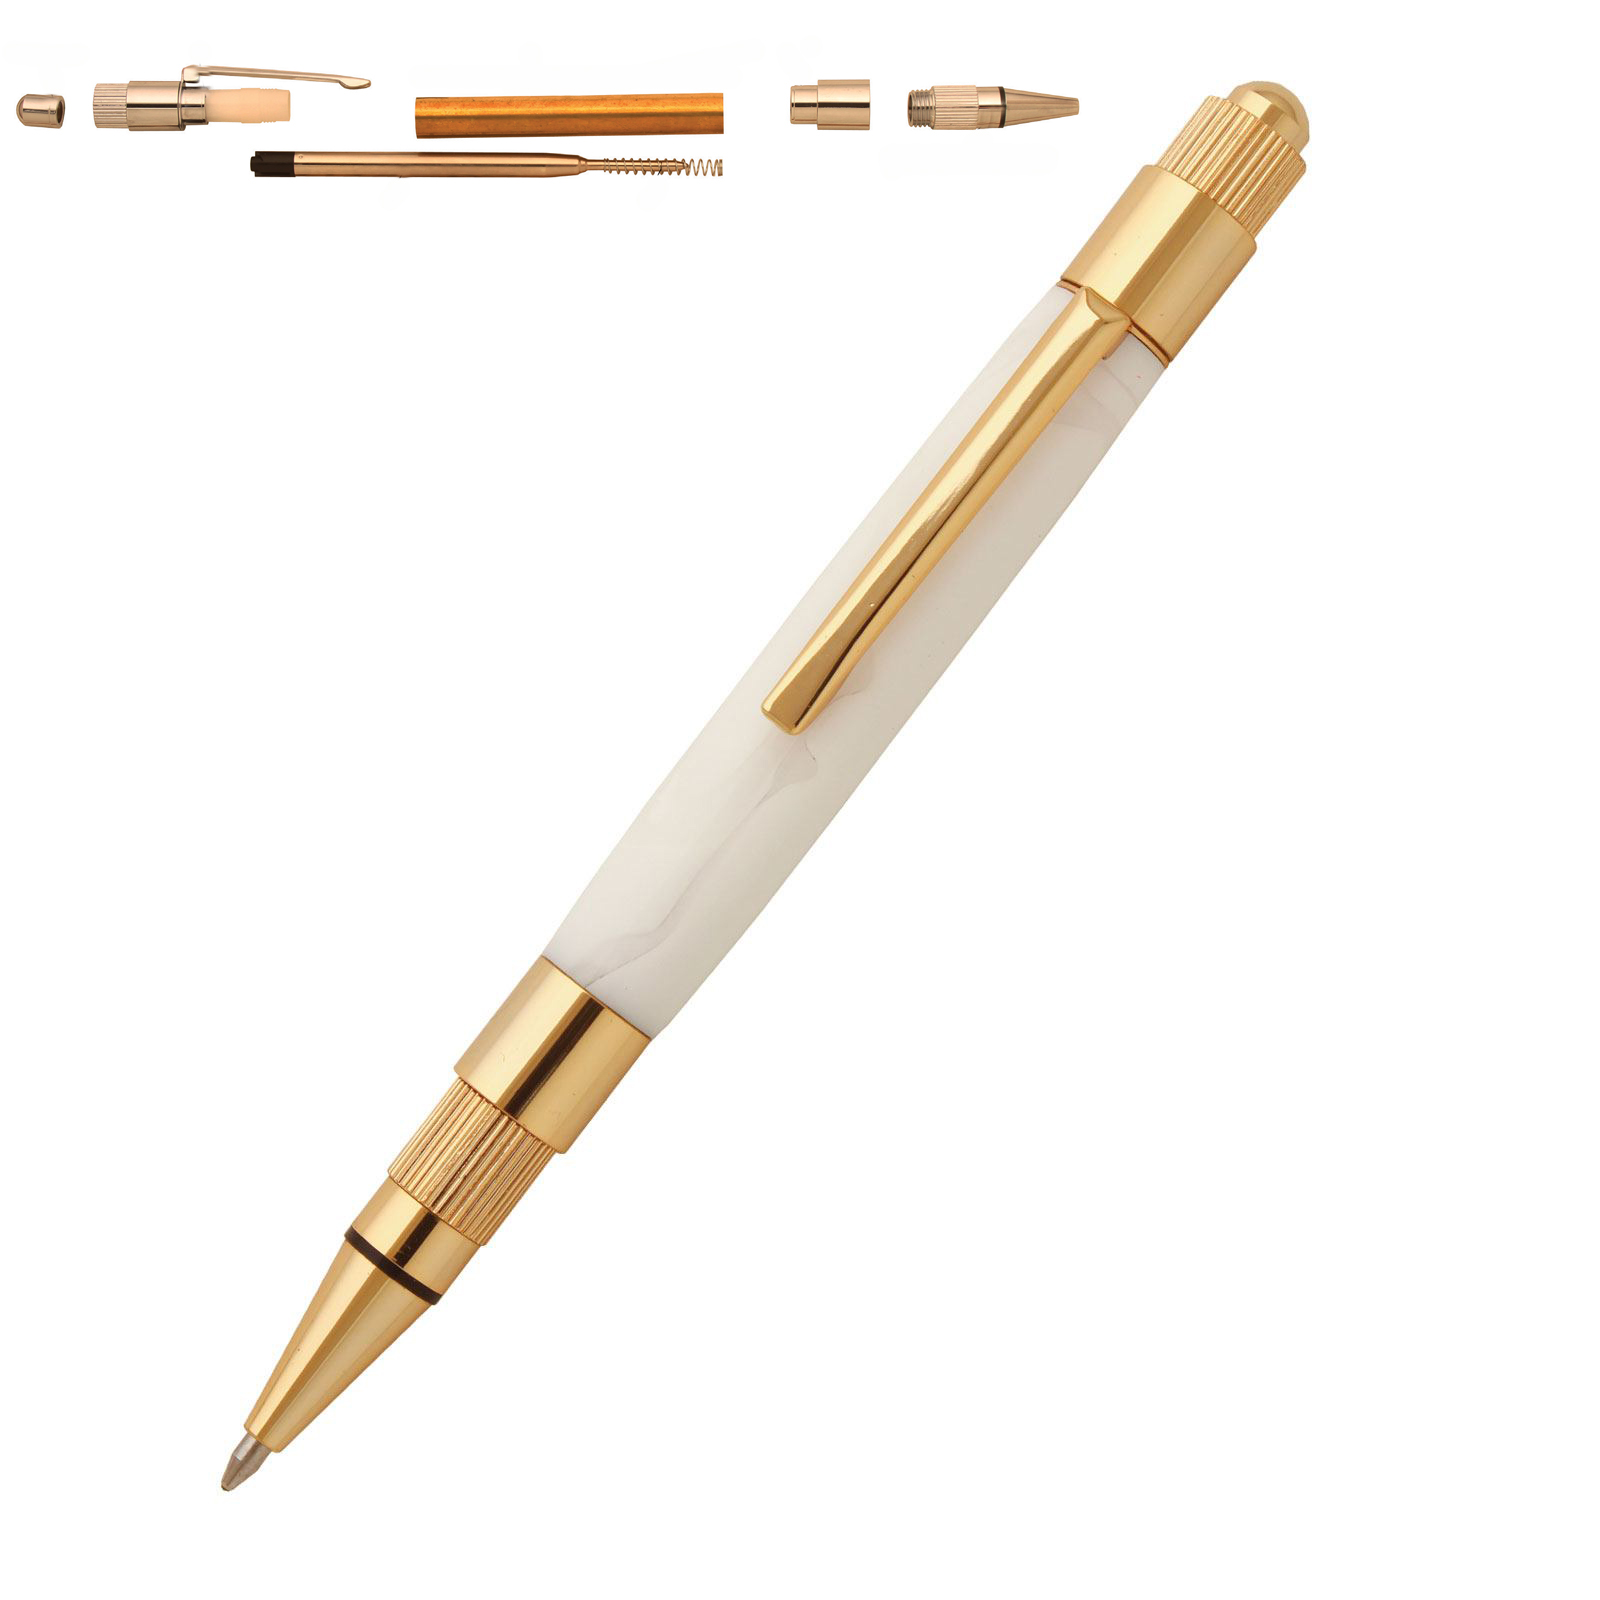 Teachers 24kt Gold Twist Pen Kit at Penn State Industries